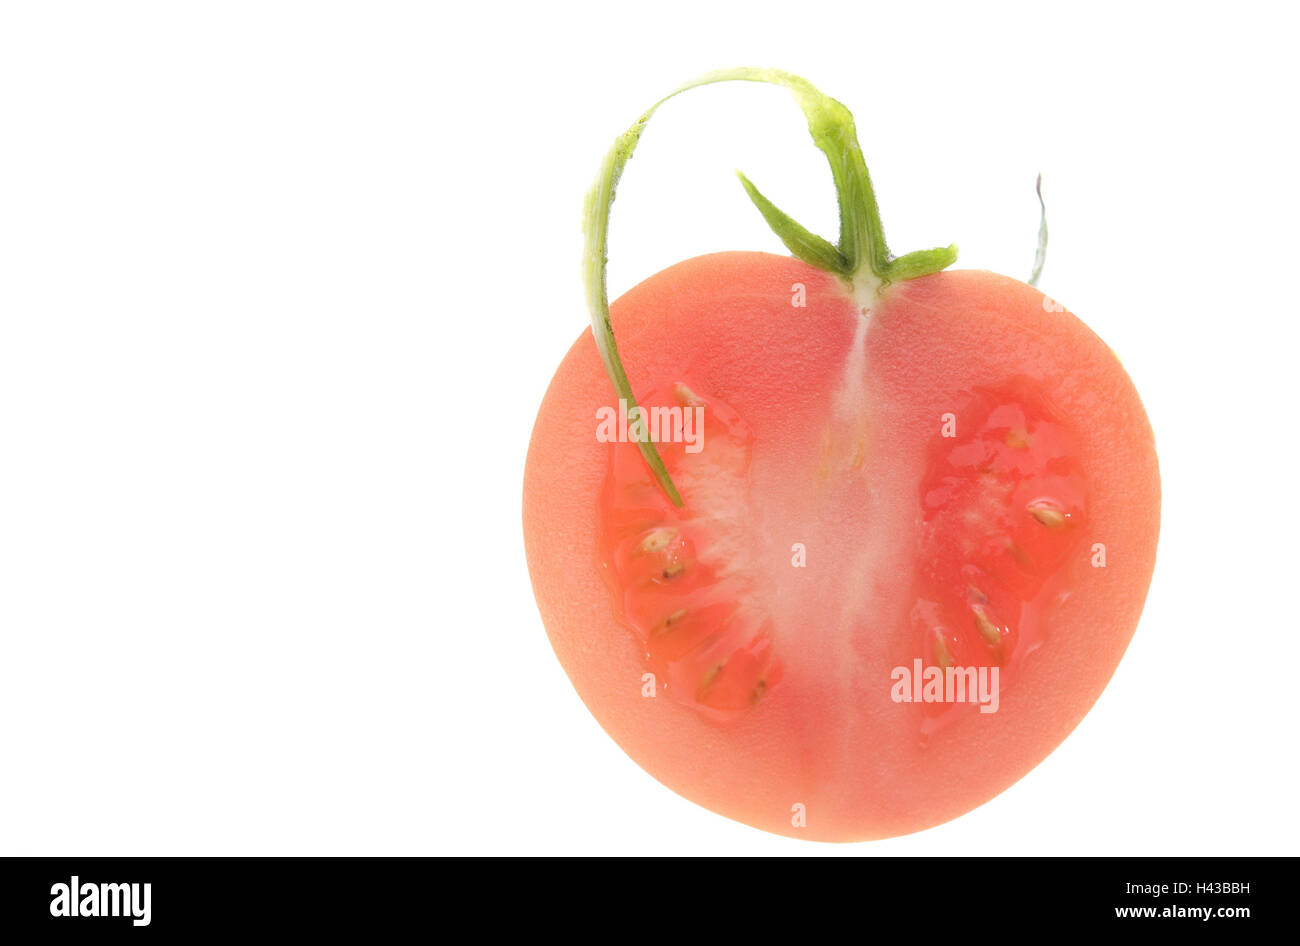 Tomato, halves, Stock Photo